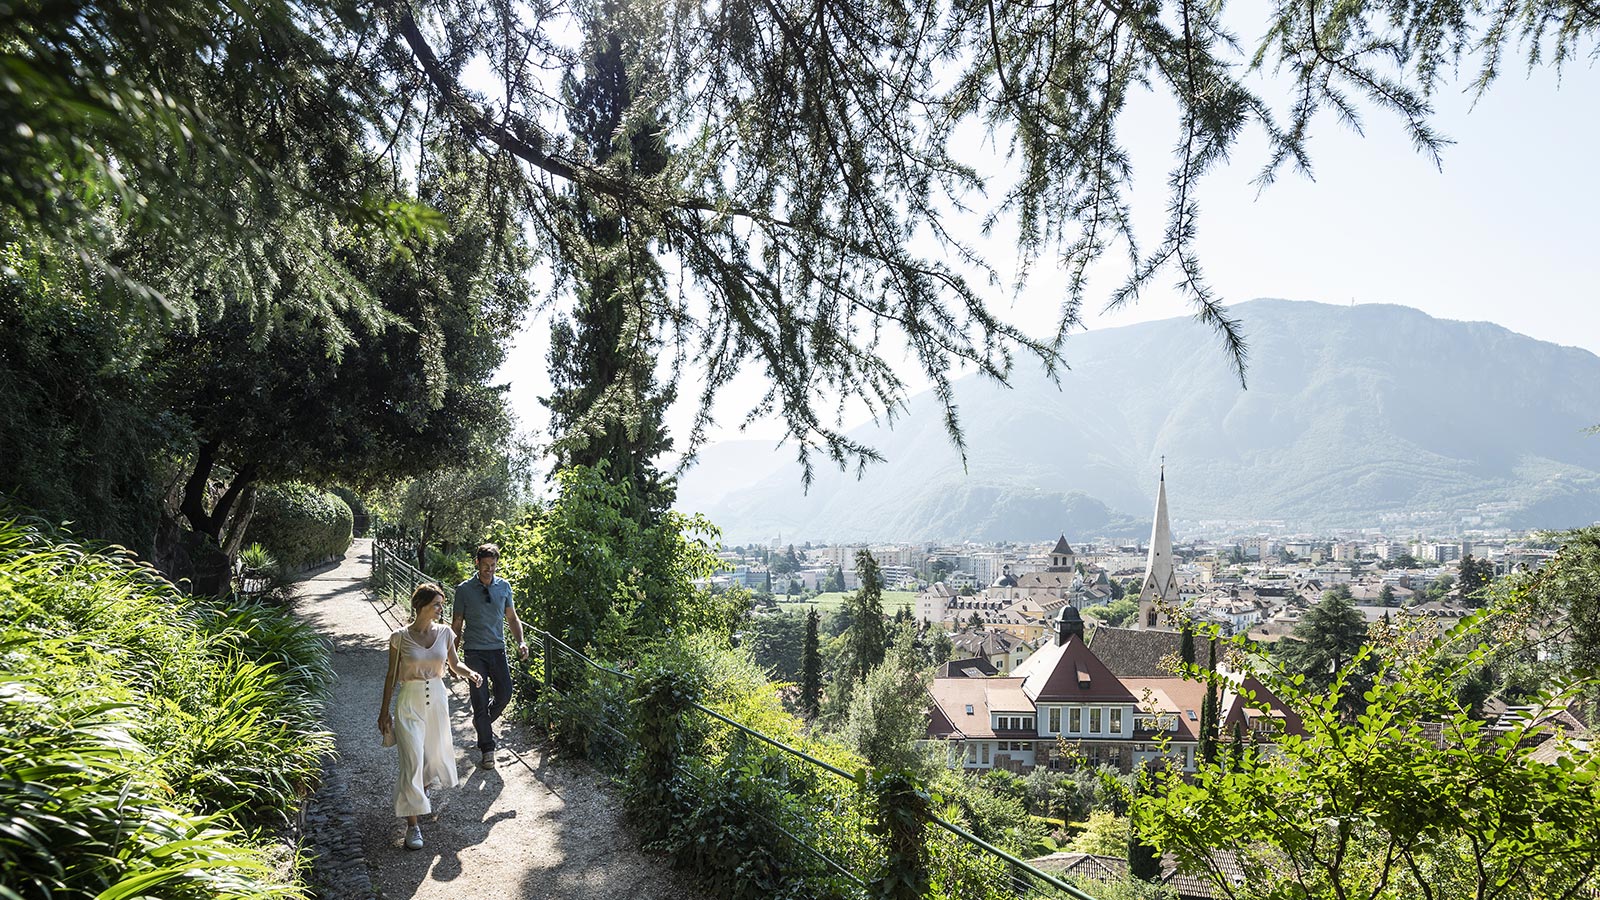 A couple enjoy a walk in the surrounding of Bolzano